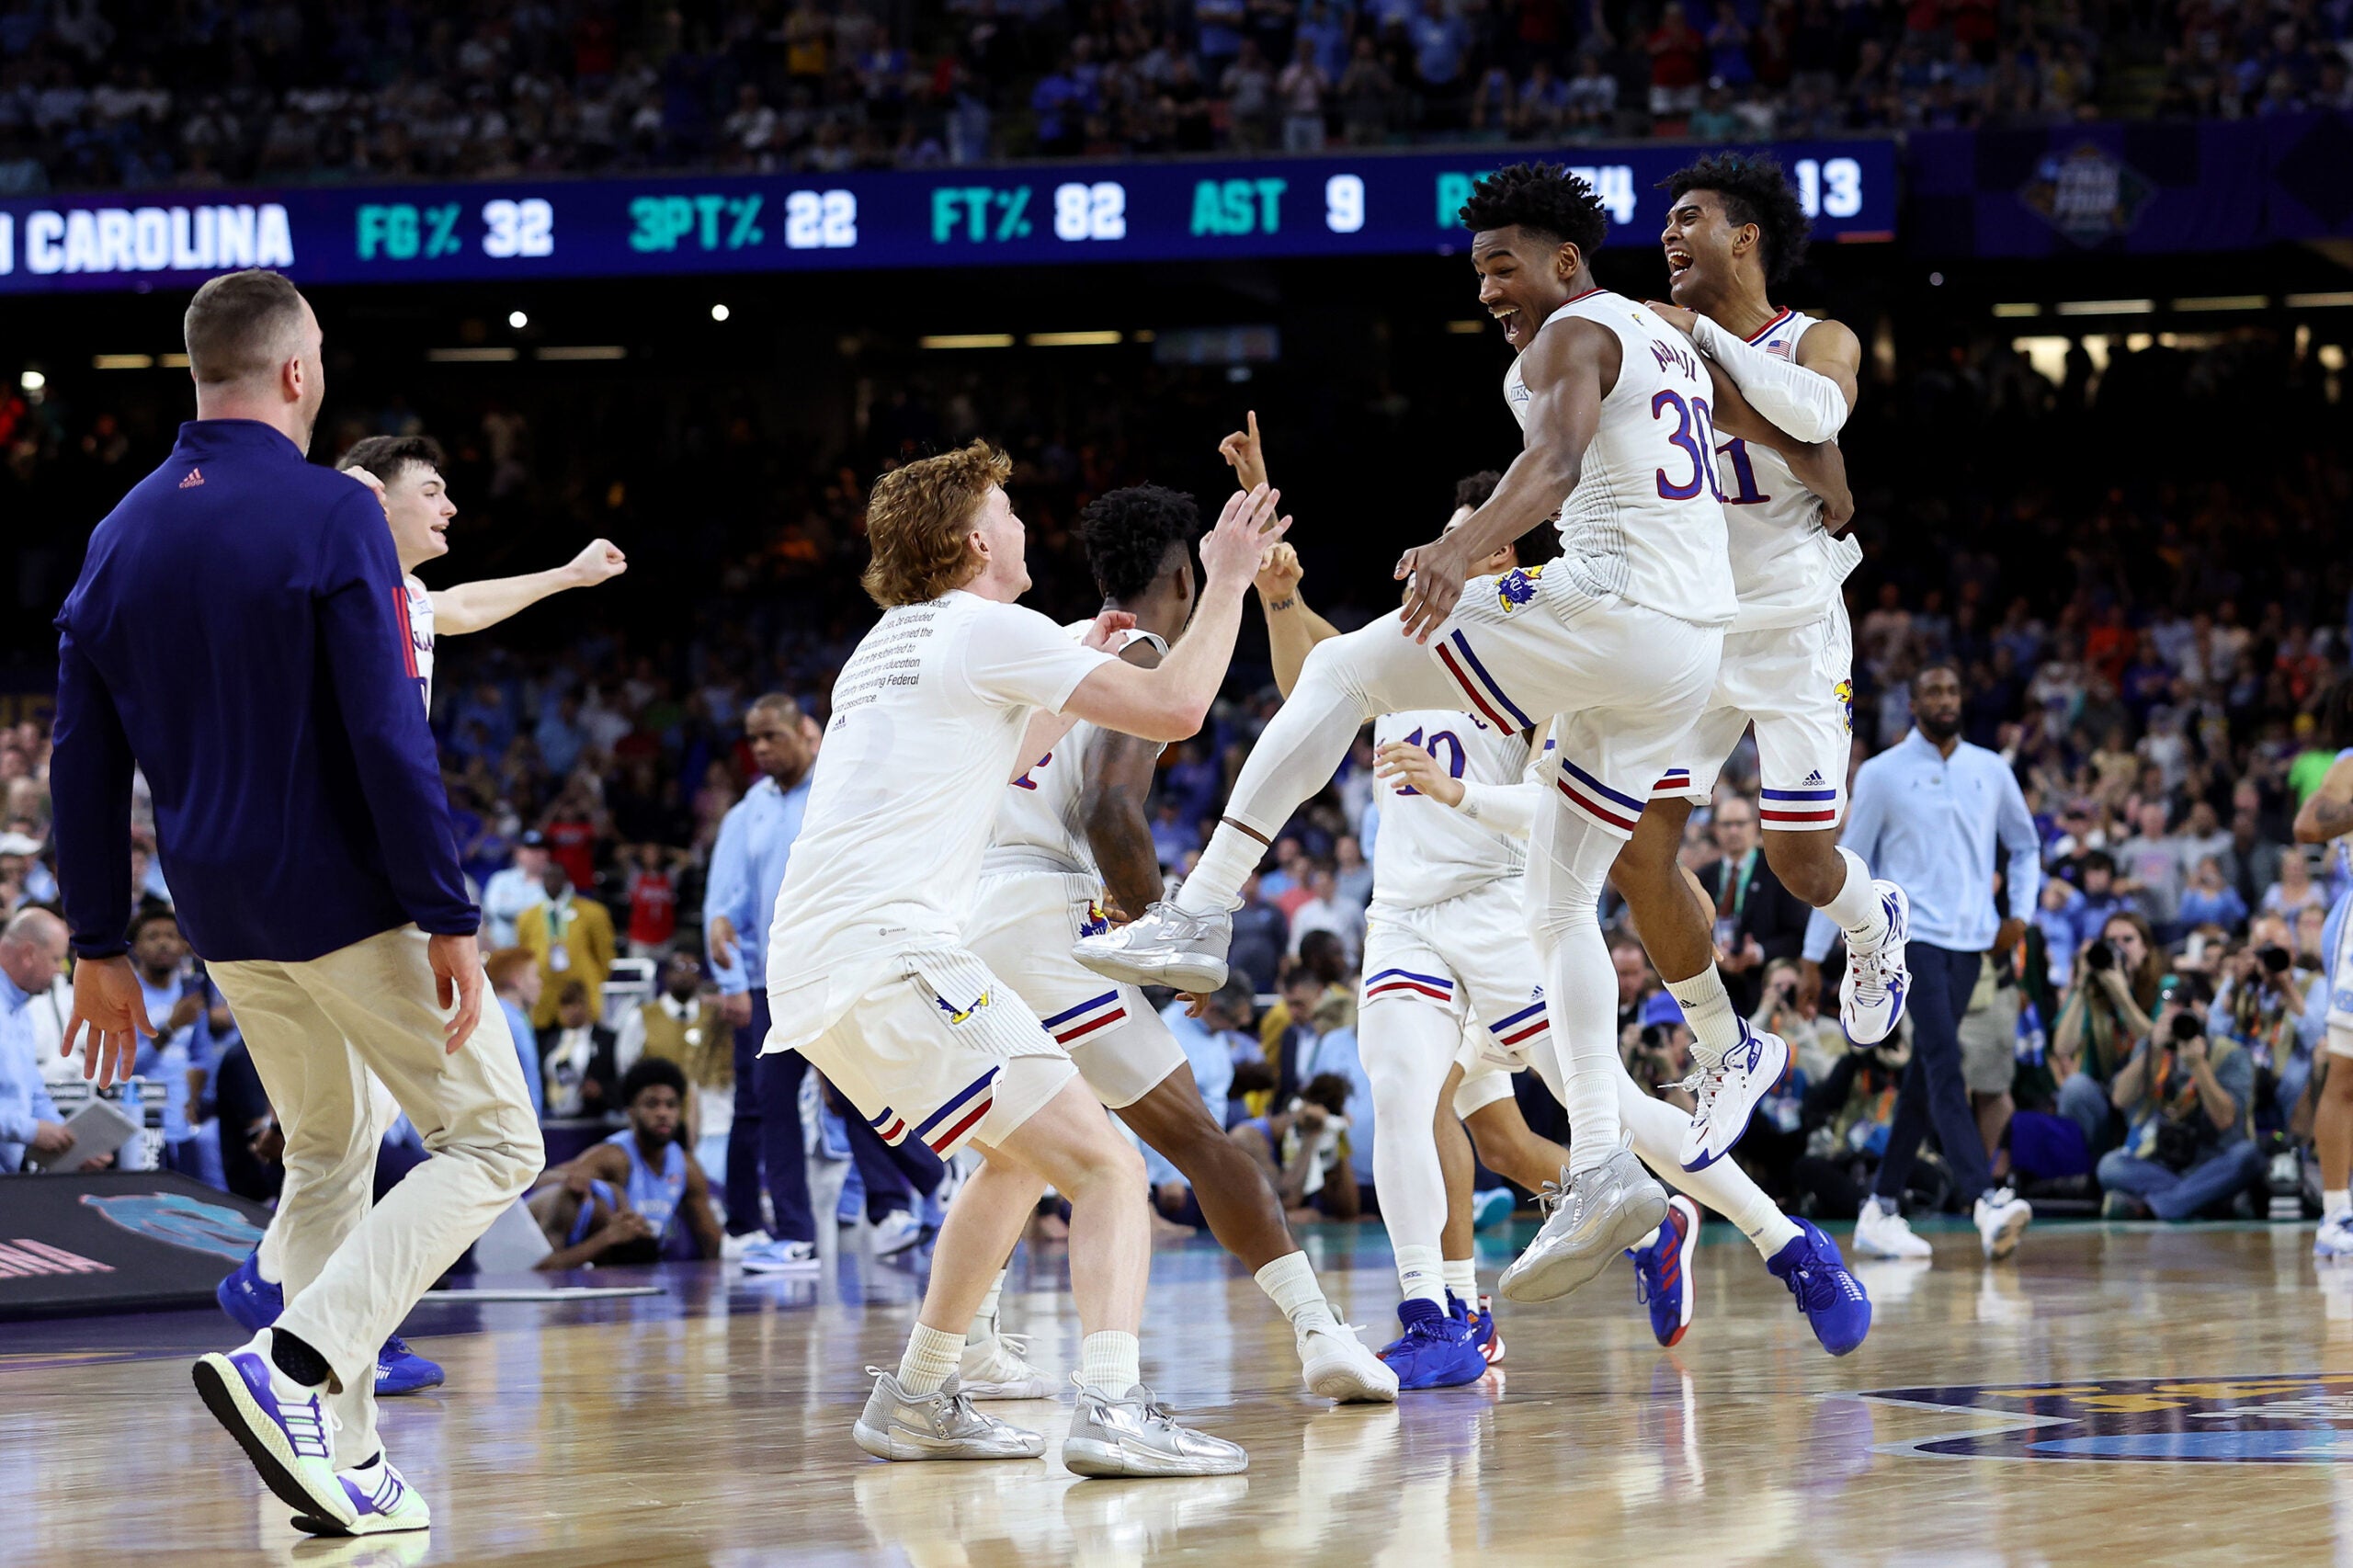 Kansas Jayhawks players celebrate after defeating the North Carolina Tar Heels 72-69 during the 2022 NCAA Men's Basketball Tournament National Championship.